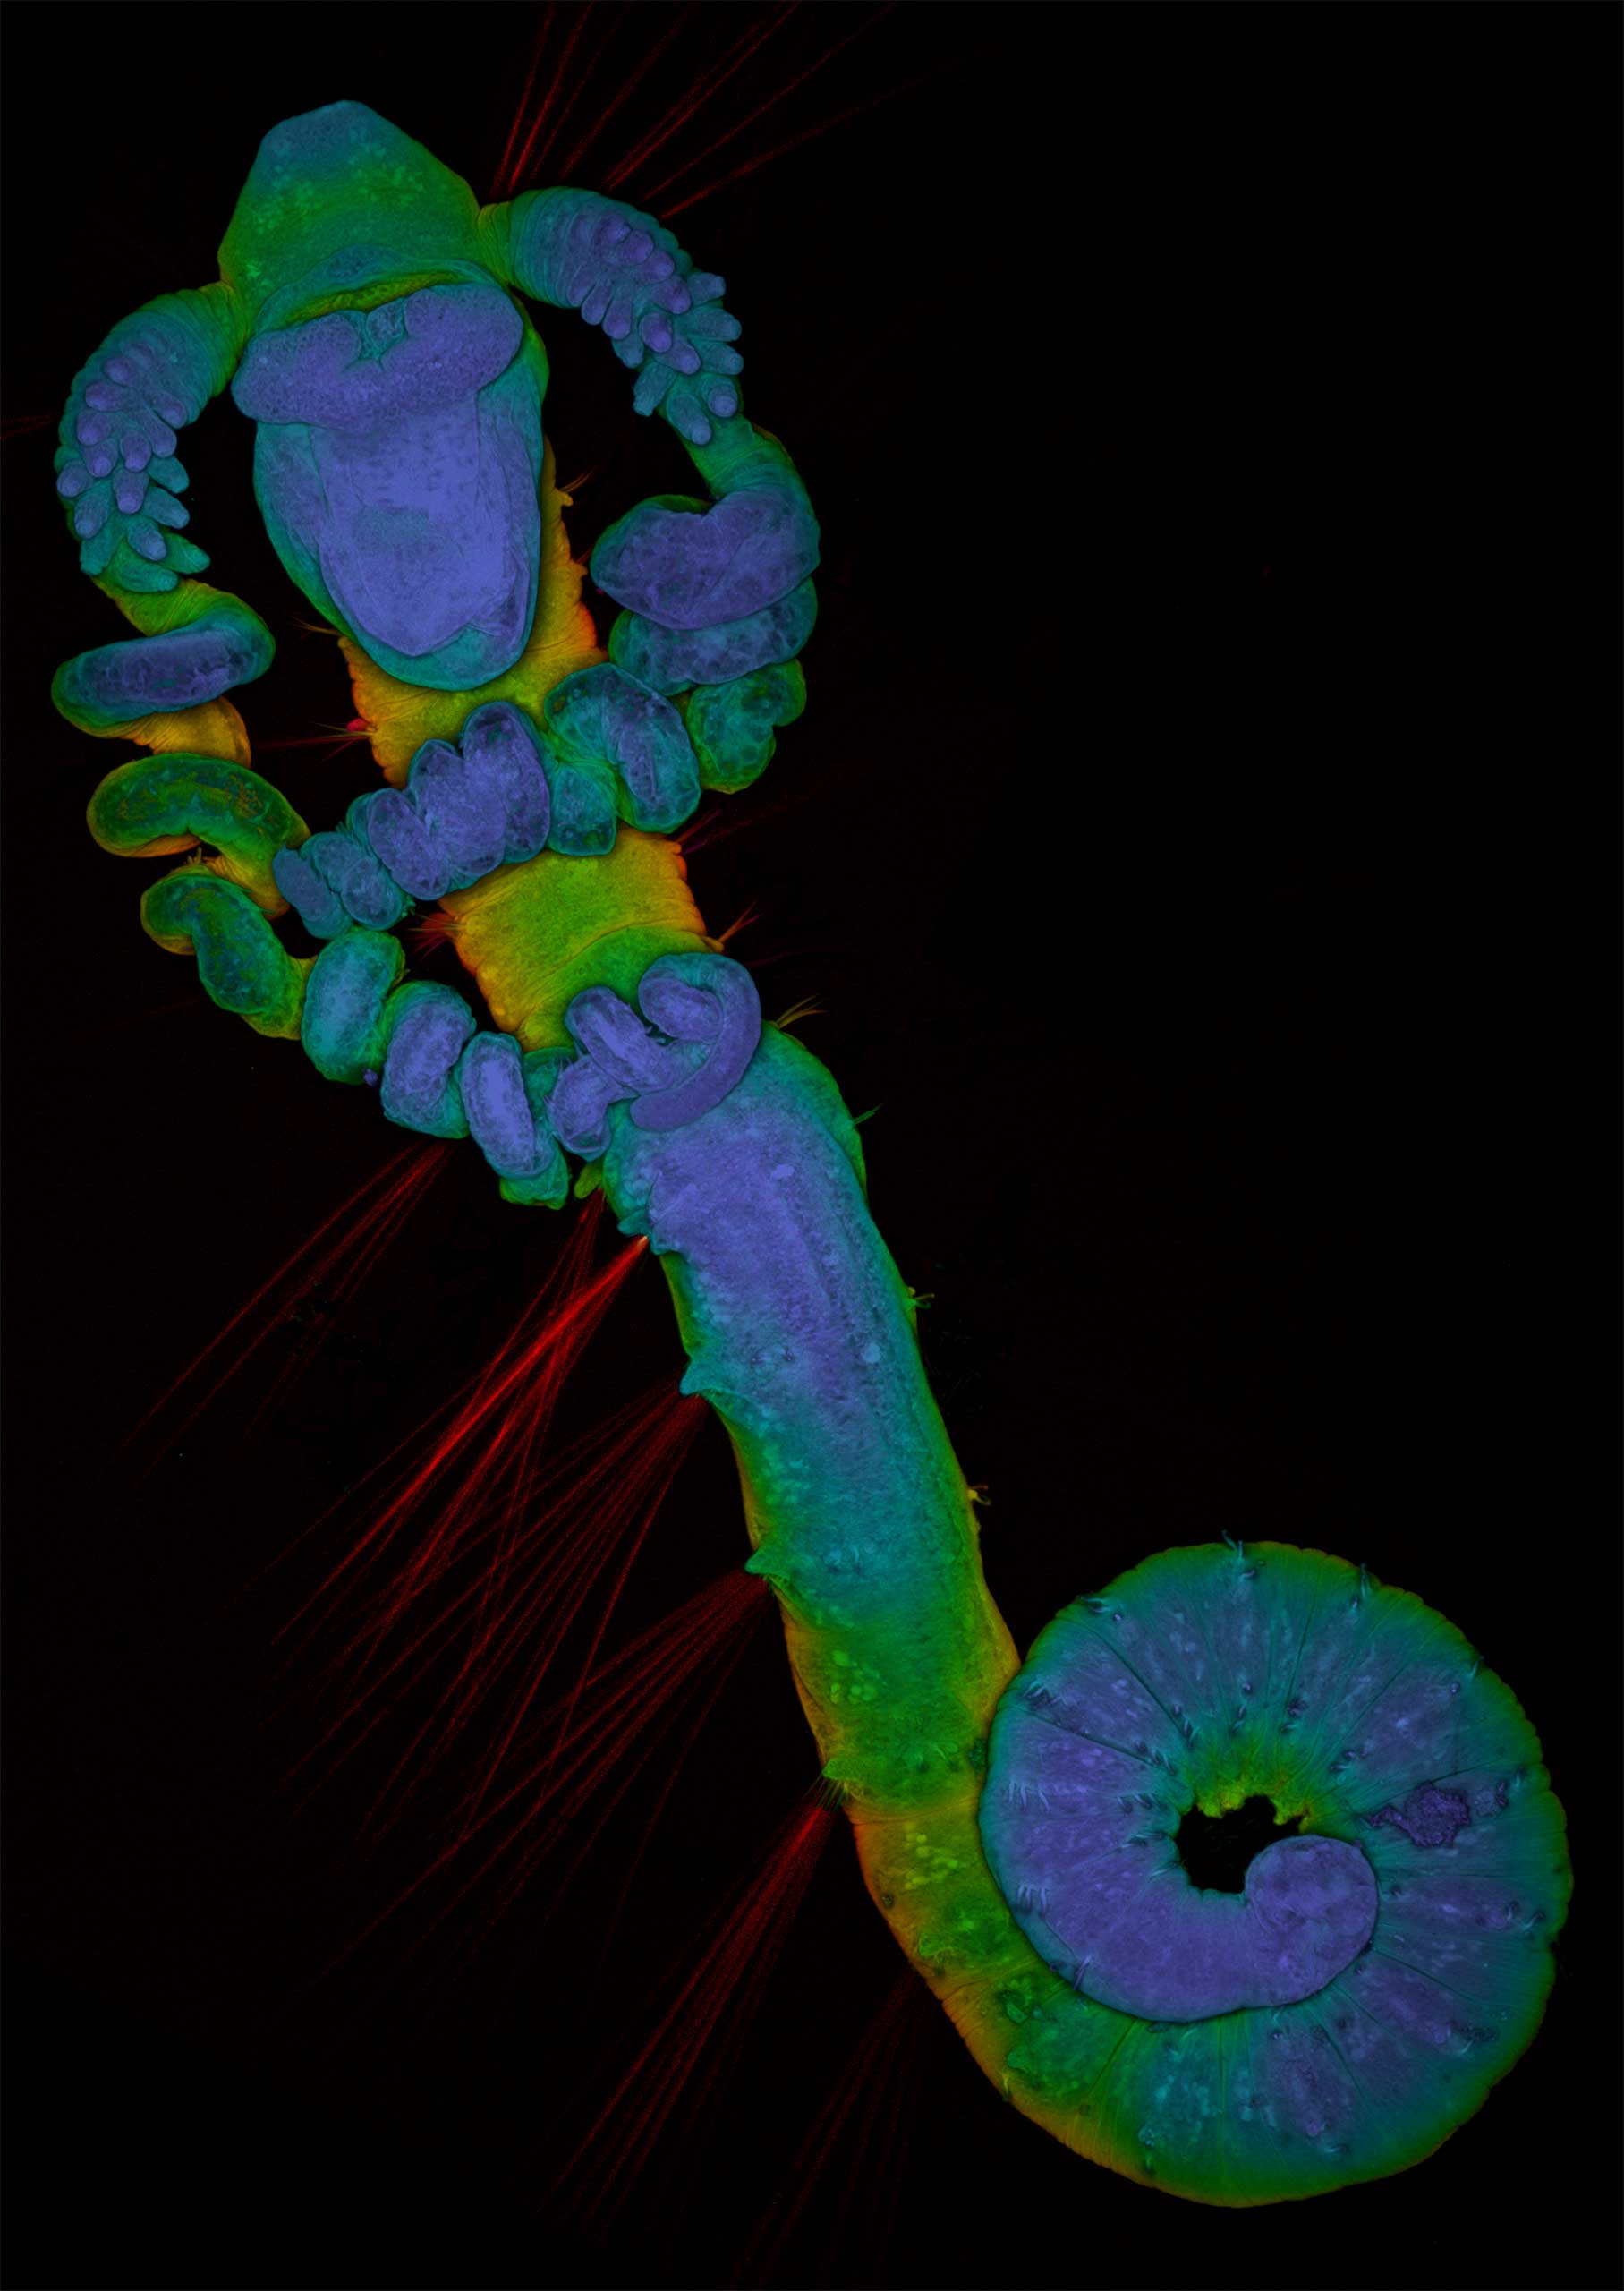 Worm larva at 10x magnification.